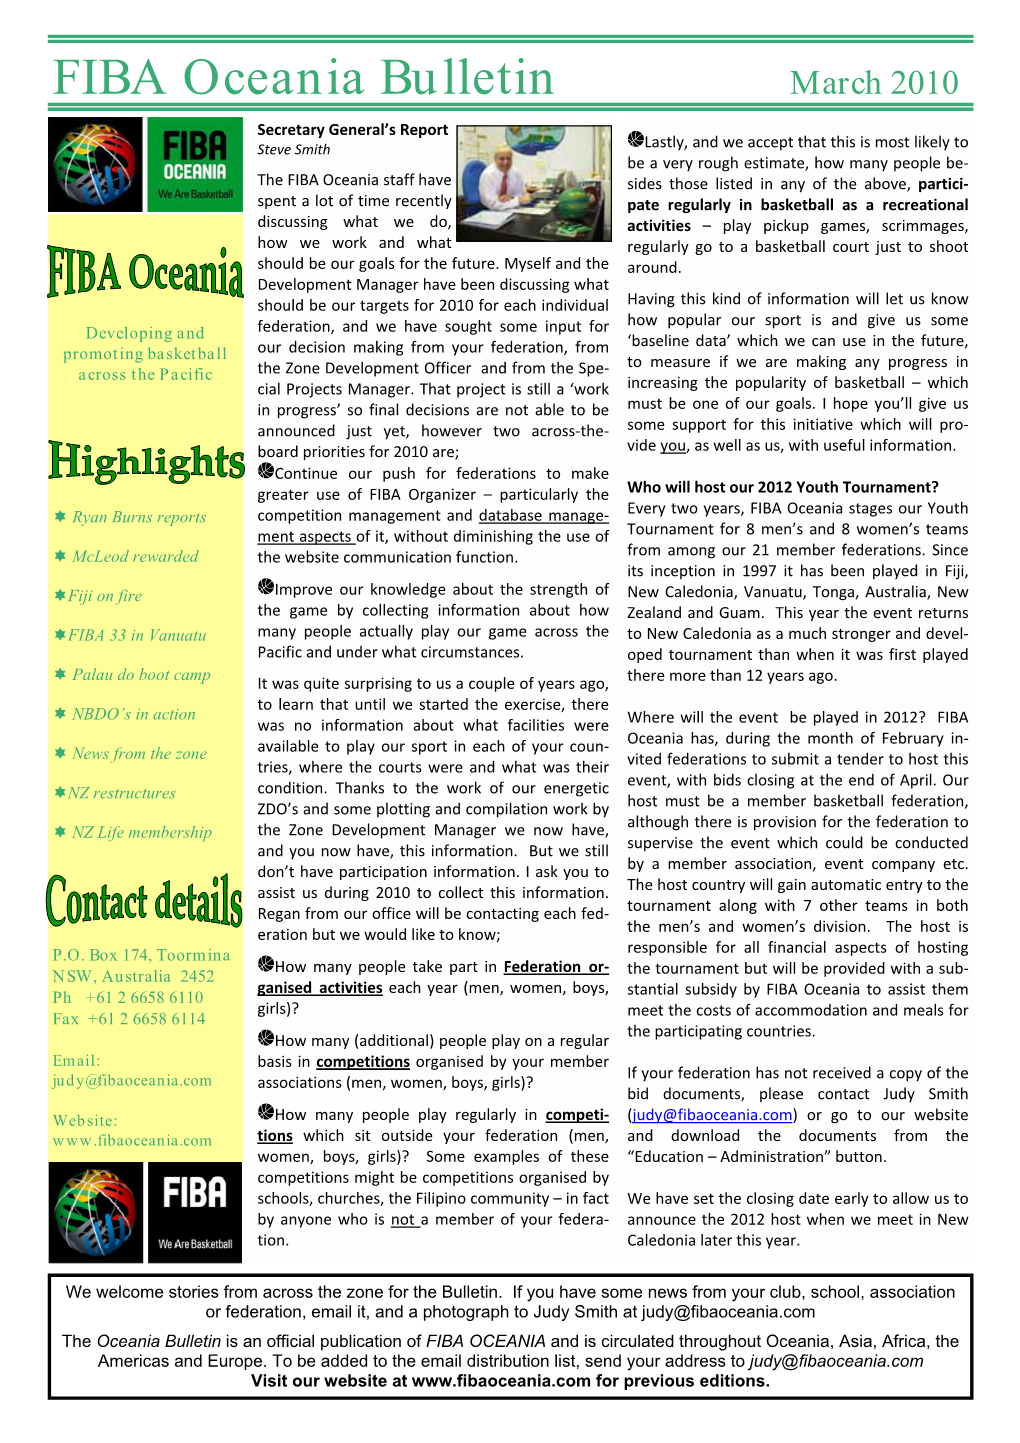 FIBA Oceania Bulletin March 2010